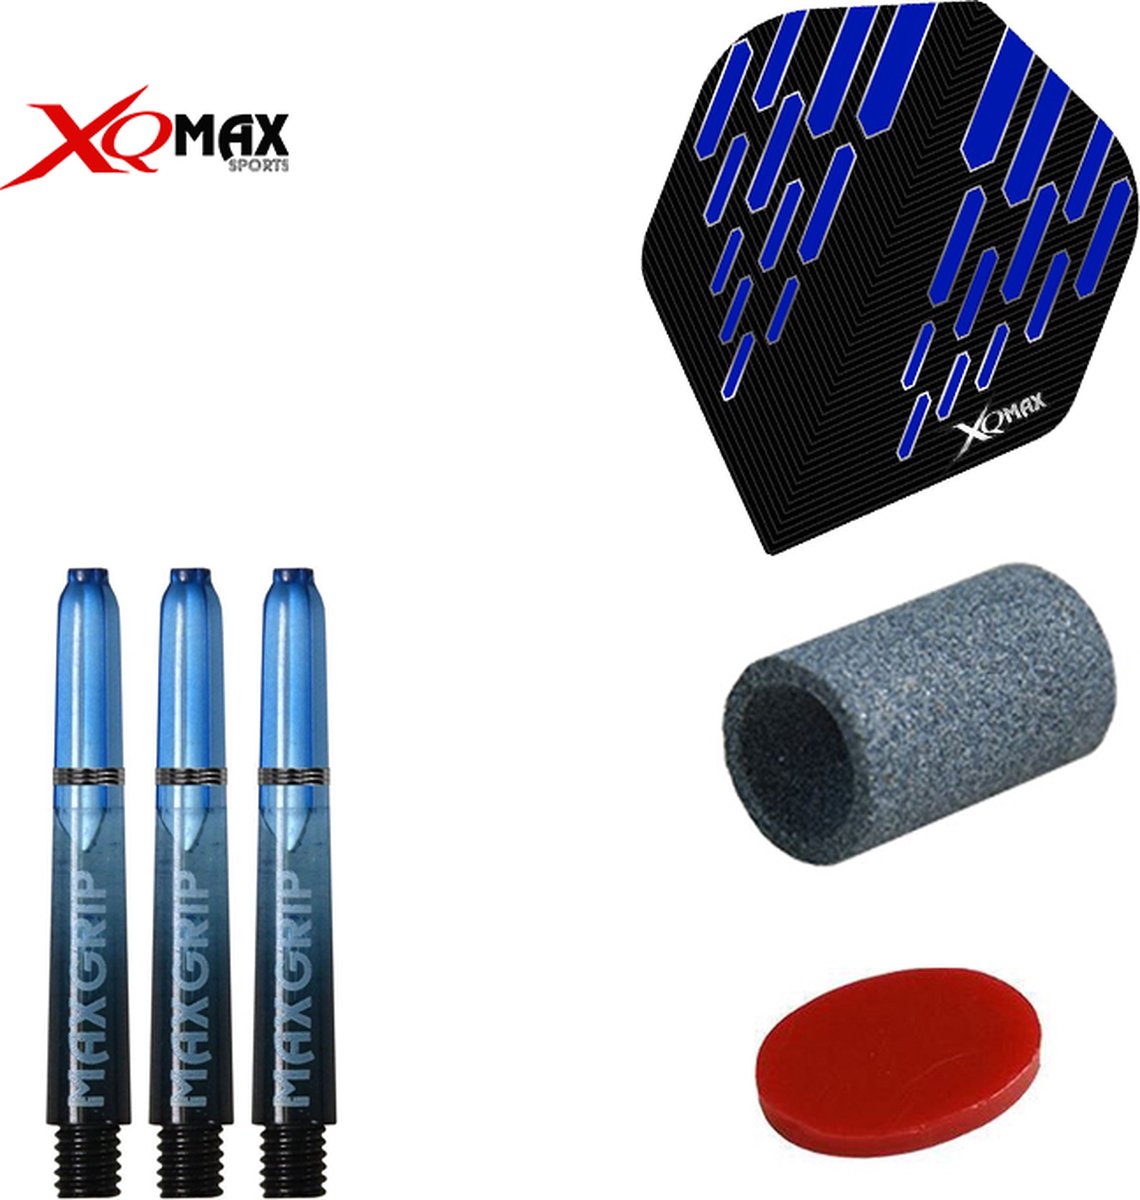 XQ MAX Contour blue flights accessoiresset, 35mm shafts, wax en slijpsteentje - blauw/zwart